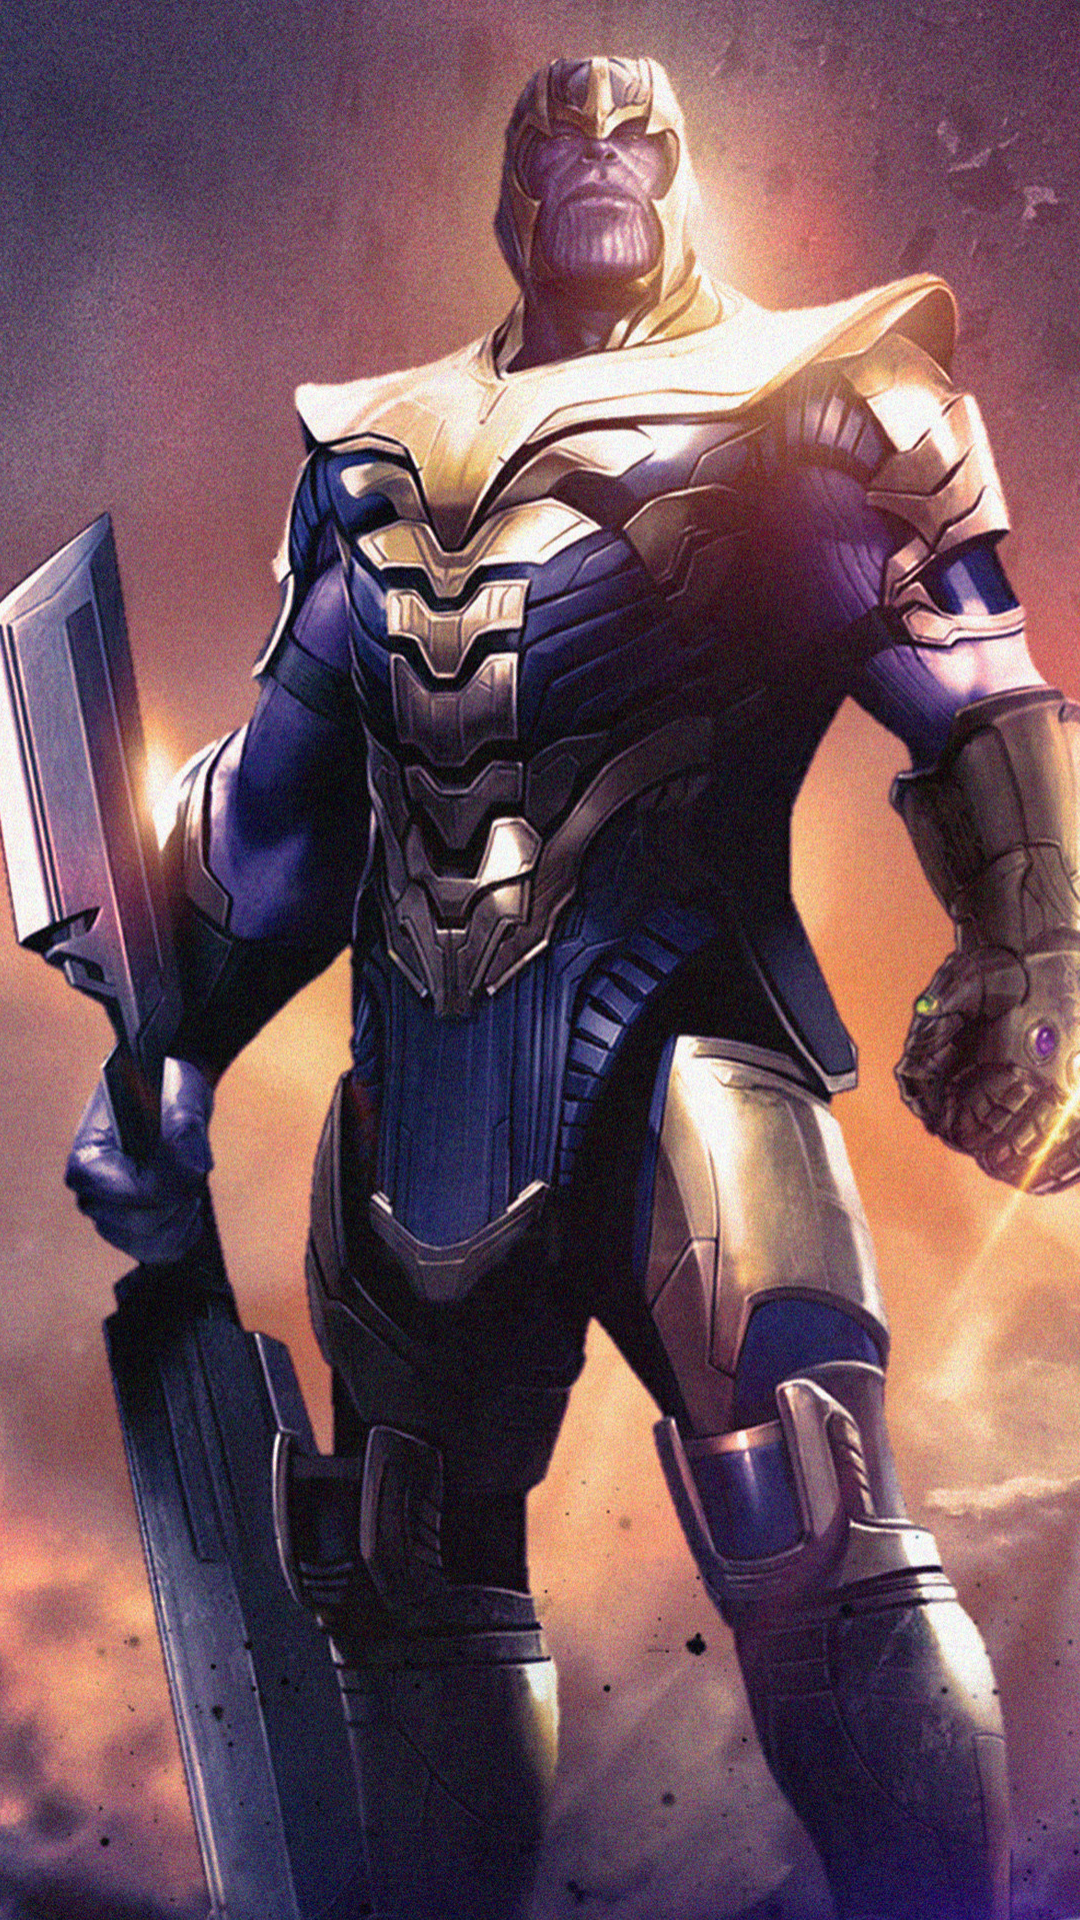 thanos, avengers endgame, movie, armor, sword, infinity gauntlet, the avengers